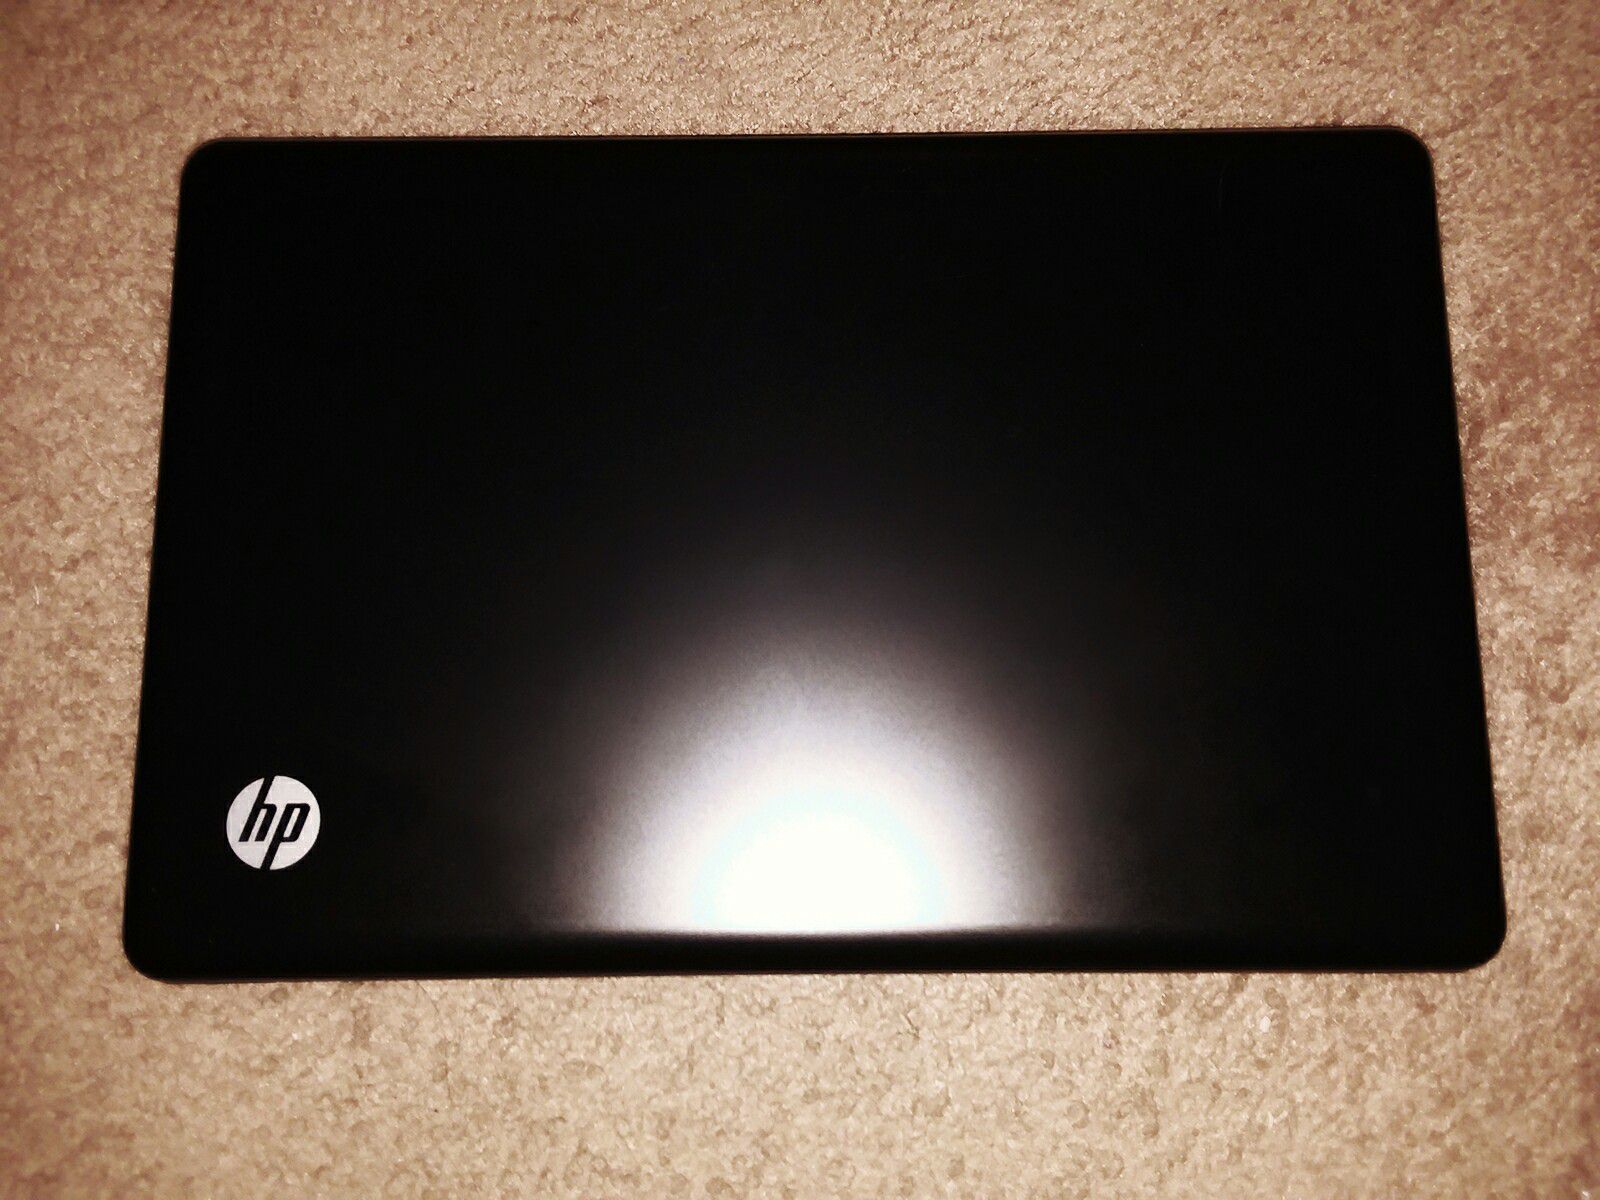 HP 2000 laptop